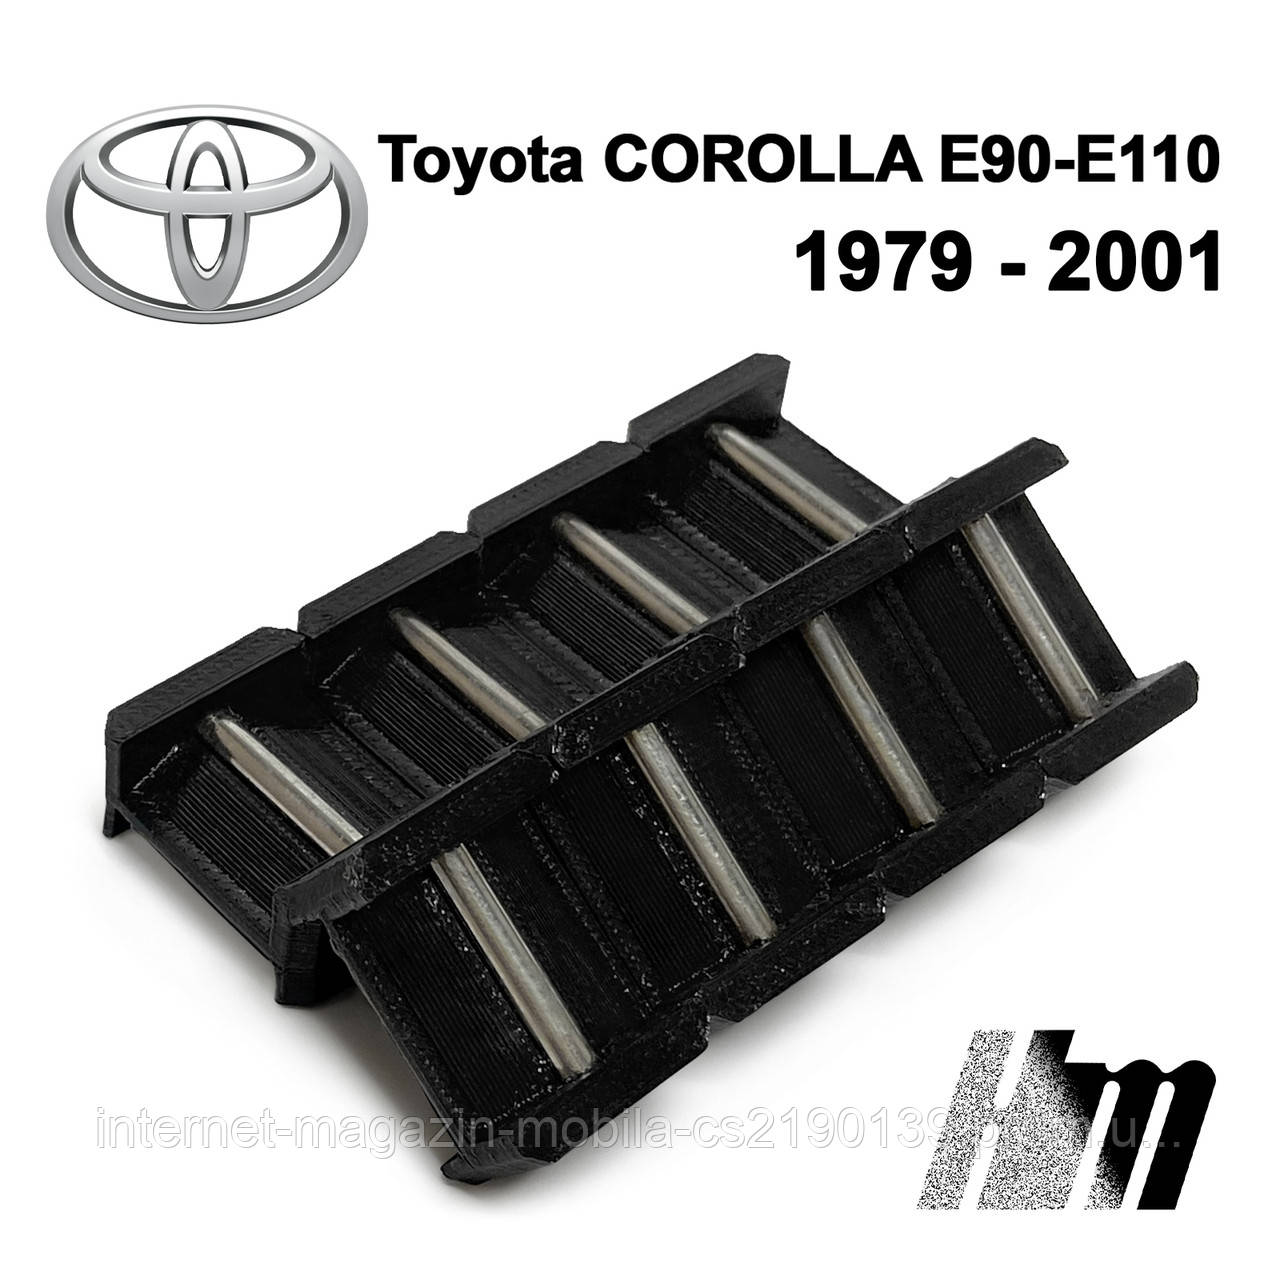 Втулка обмежувача дверей, фіксатор, вкладки обмежувачів дверей Toyota COROLLA E90-E110 1979-2001